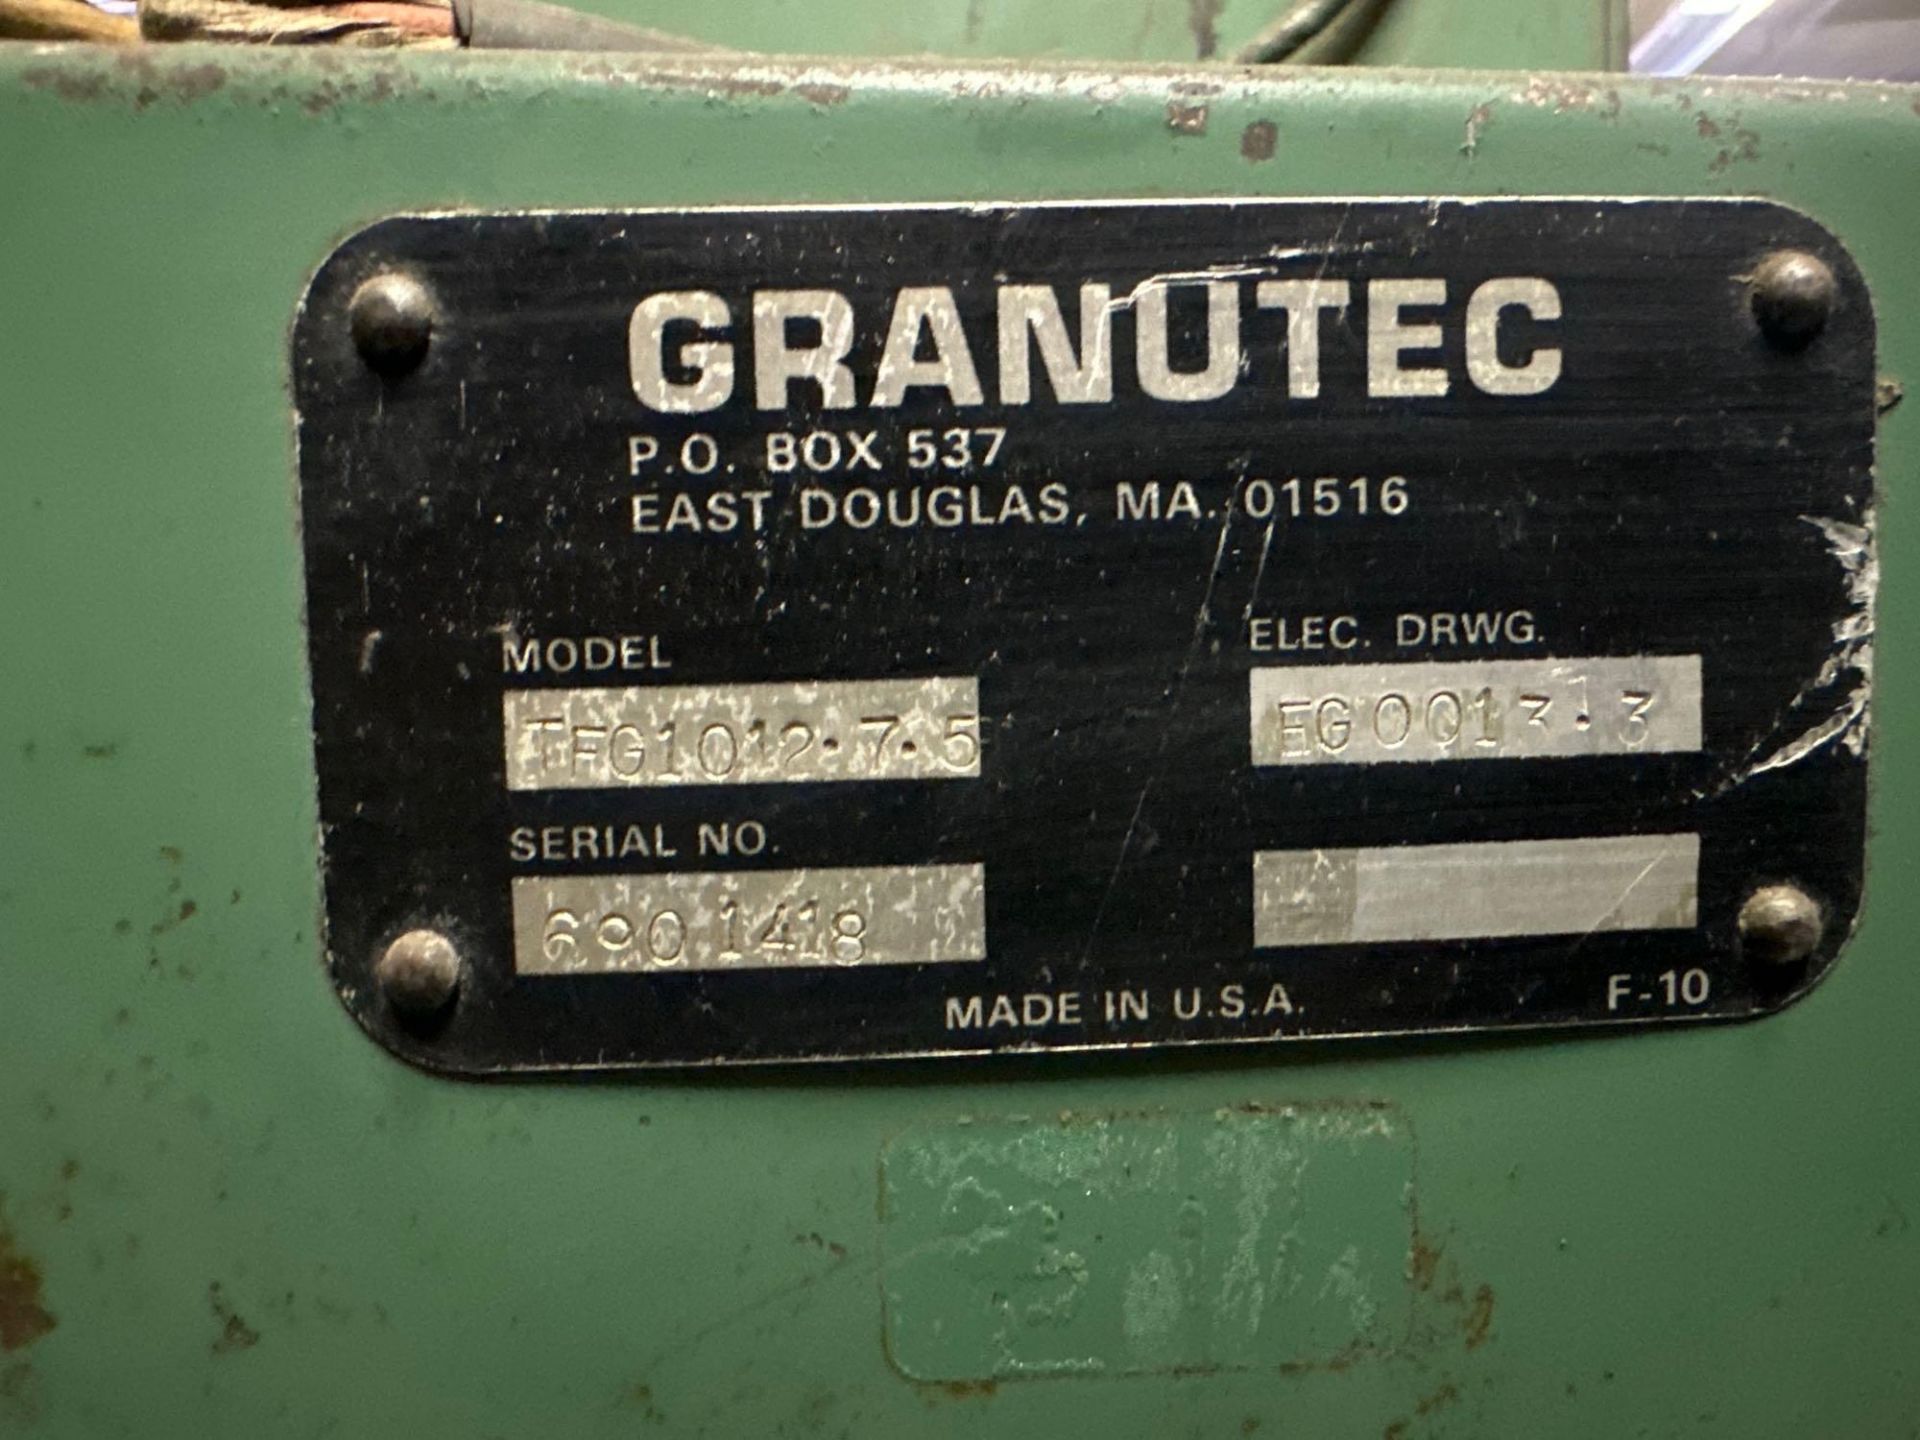 Granutec TFG.1012.RF.7.5 Granulator, s/n 6901418 - Image 6 of 6